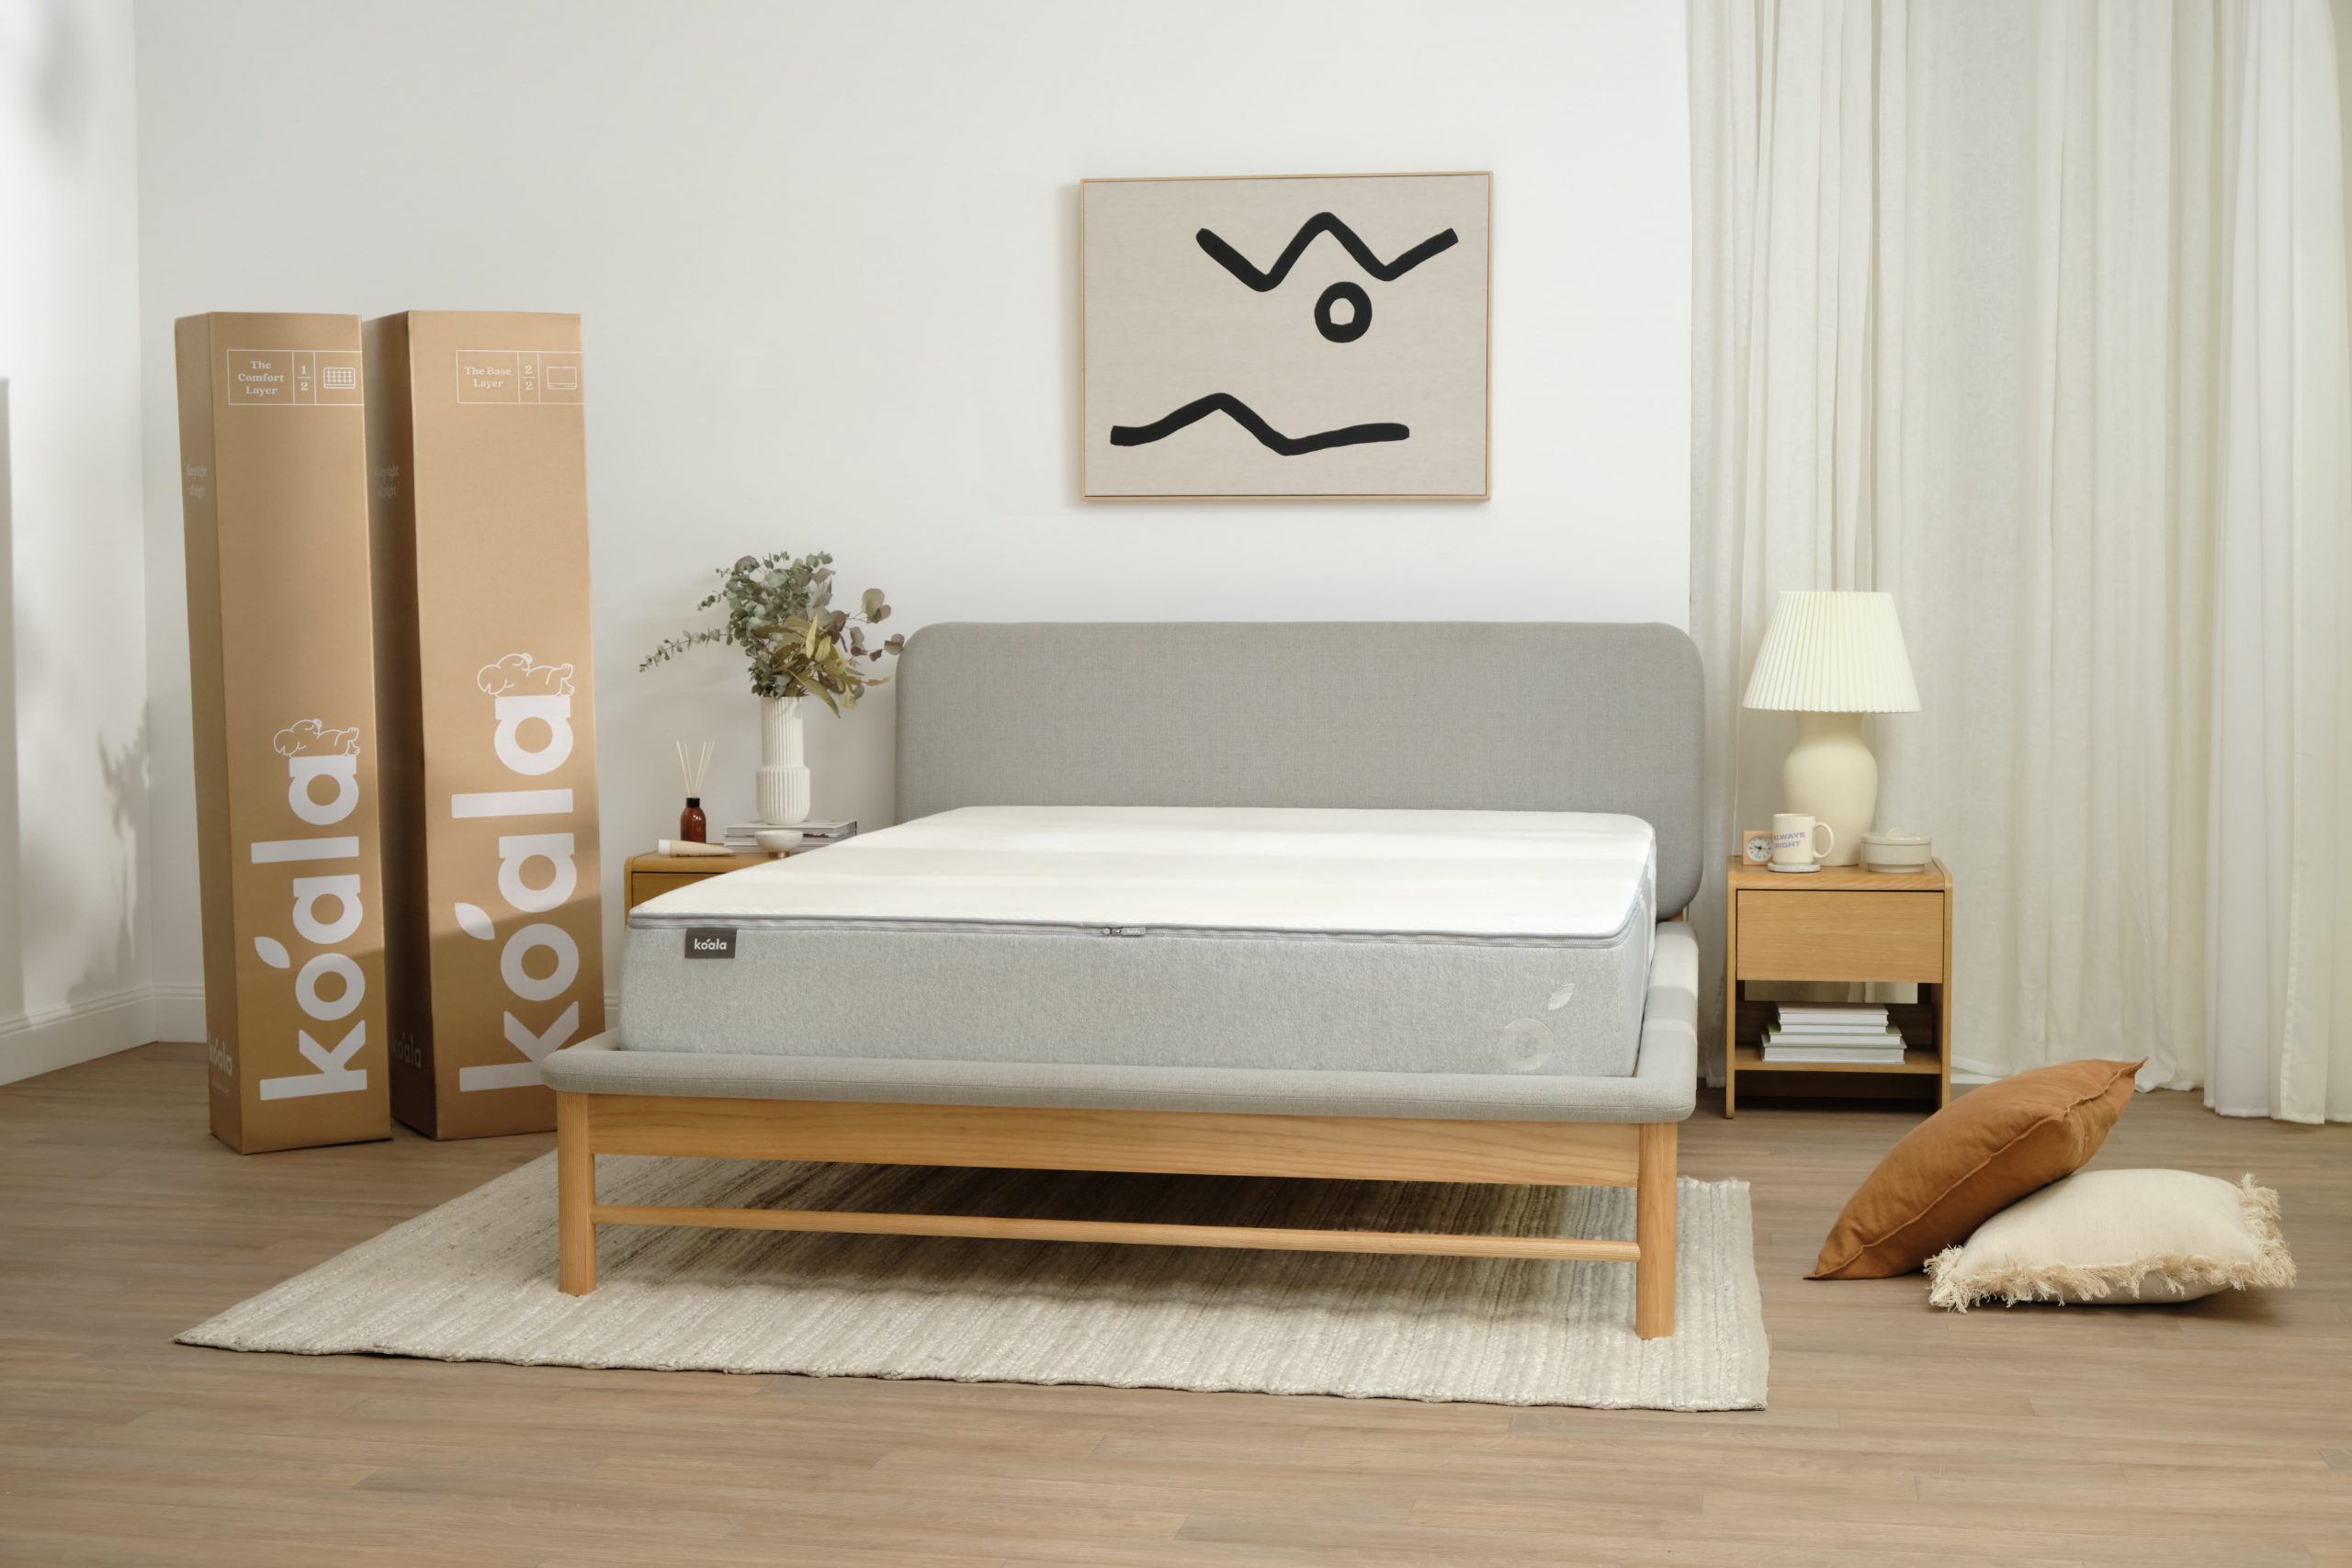 A Koala mattress on a bed next to a Koala mattress delivery box after someone has bought the mattress online